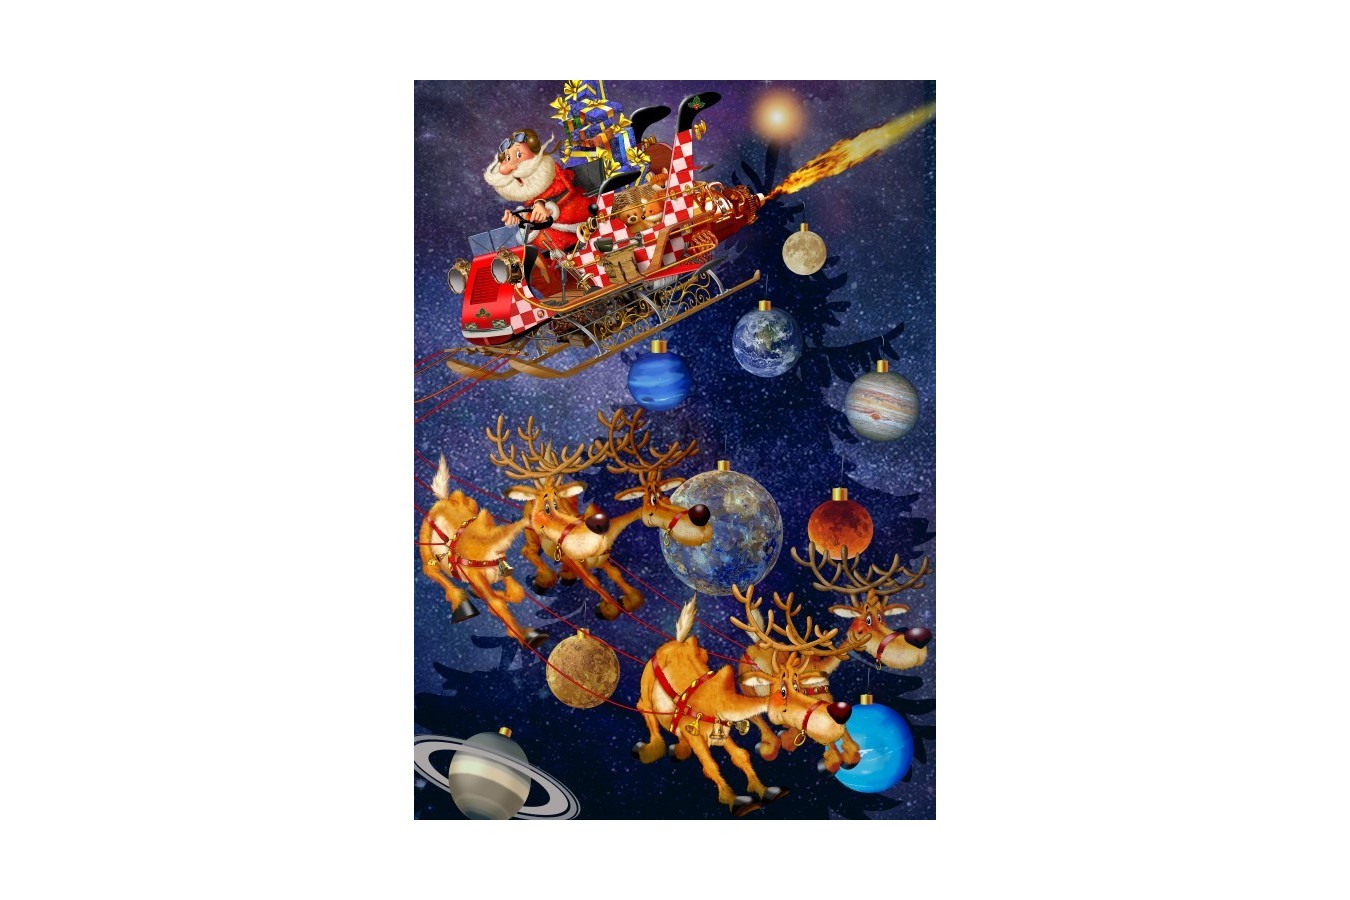 Puzzle Bluebird - Francois Ruyer: Santa Claus is arriving!, 1500 piese (70445)